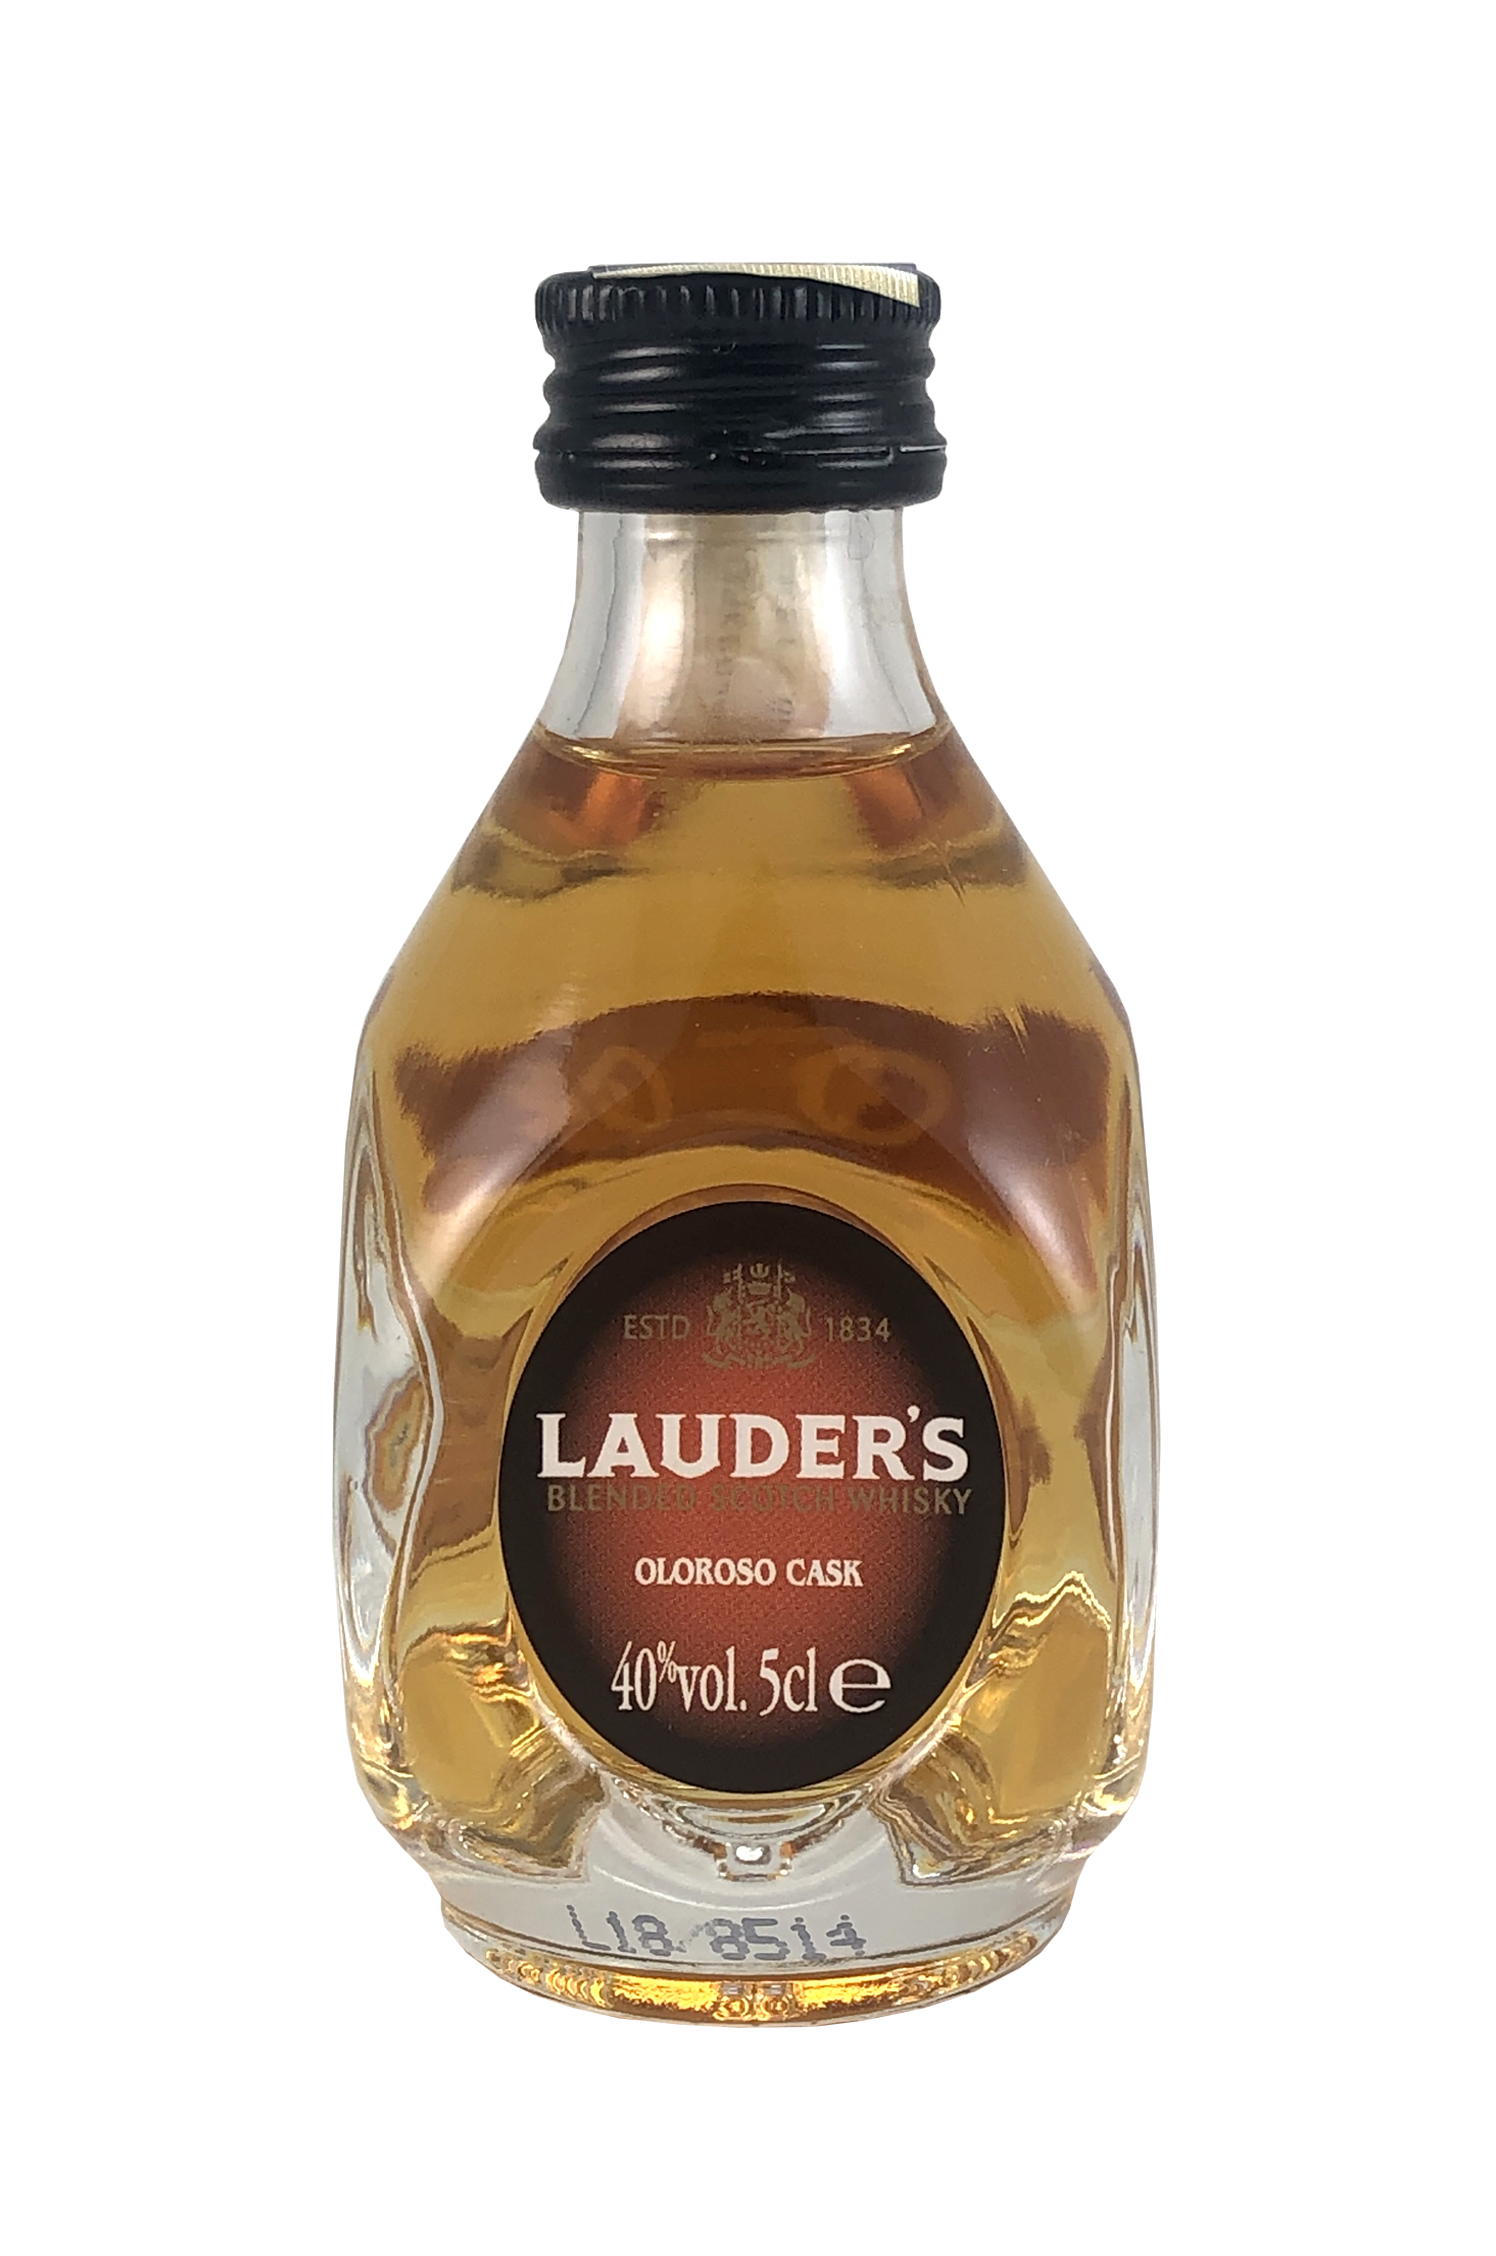 Lauder’s Oloroso Cask Whisky